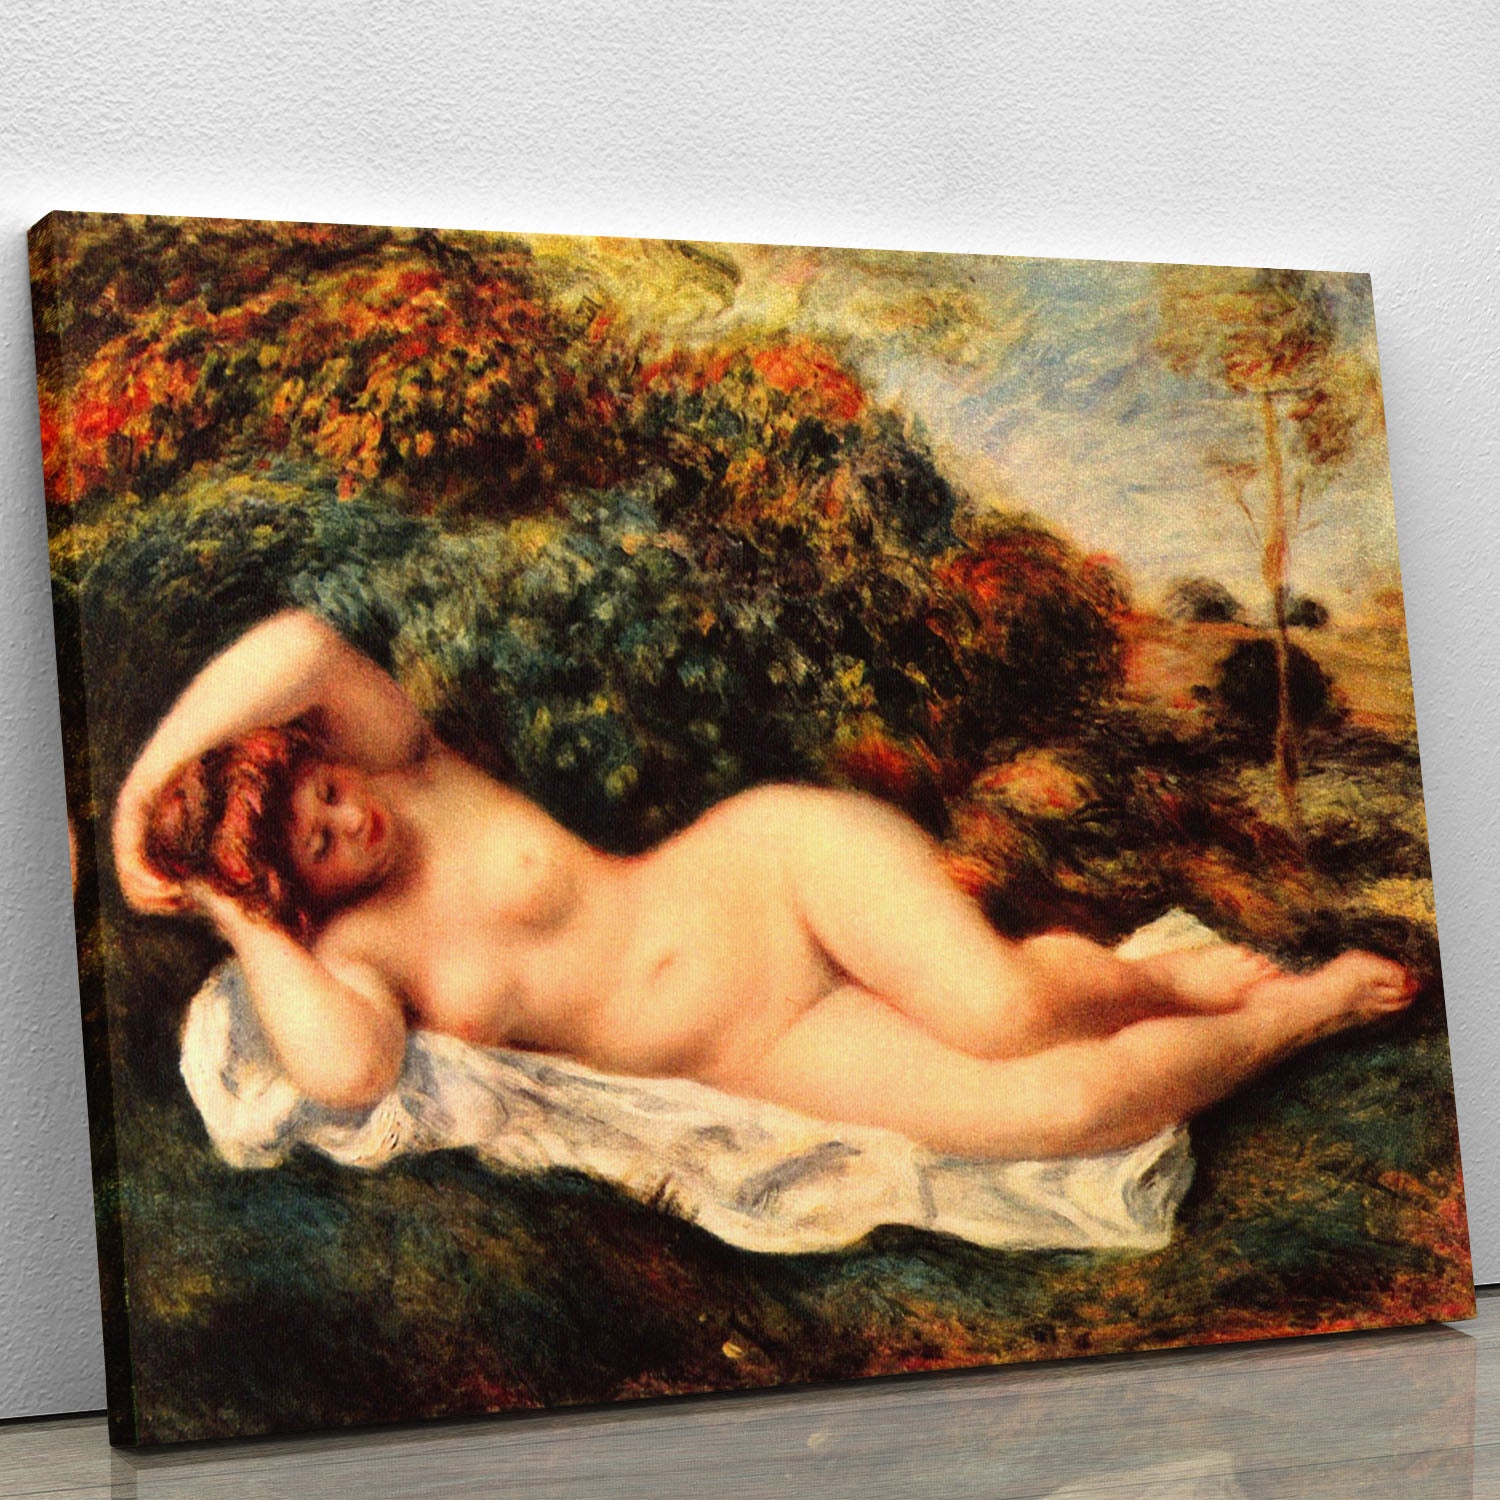 Bathing sleeping the baker by Renoir Canvas Print or Poster - Canvas Art Rocks - 1